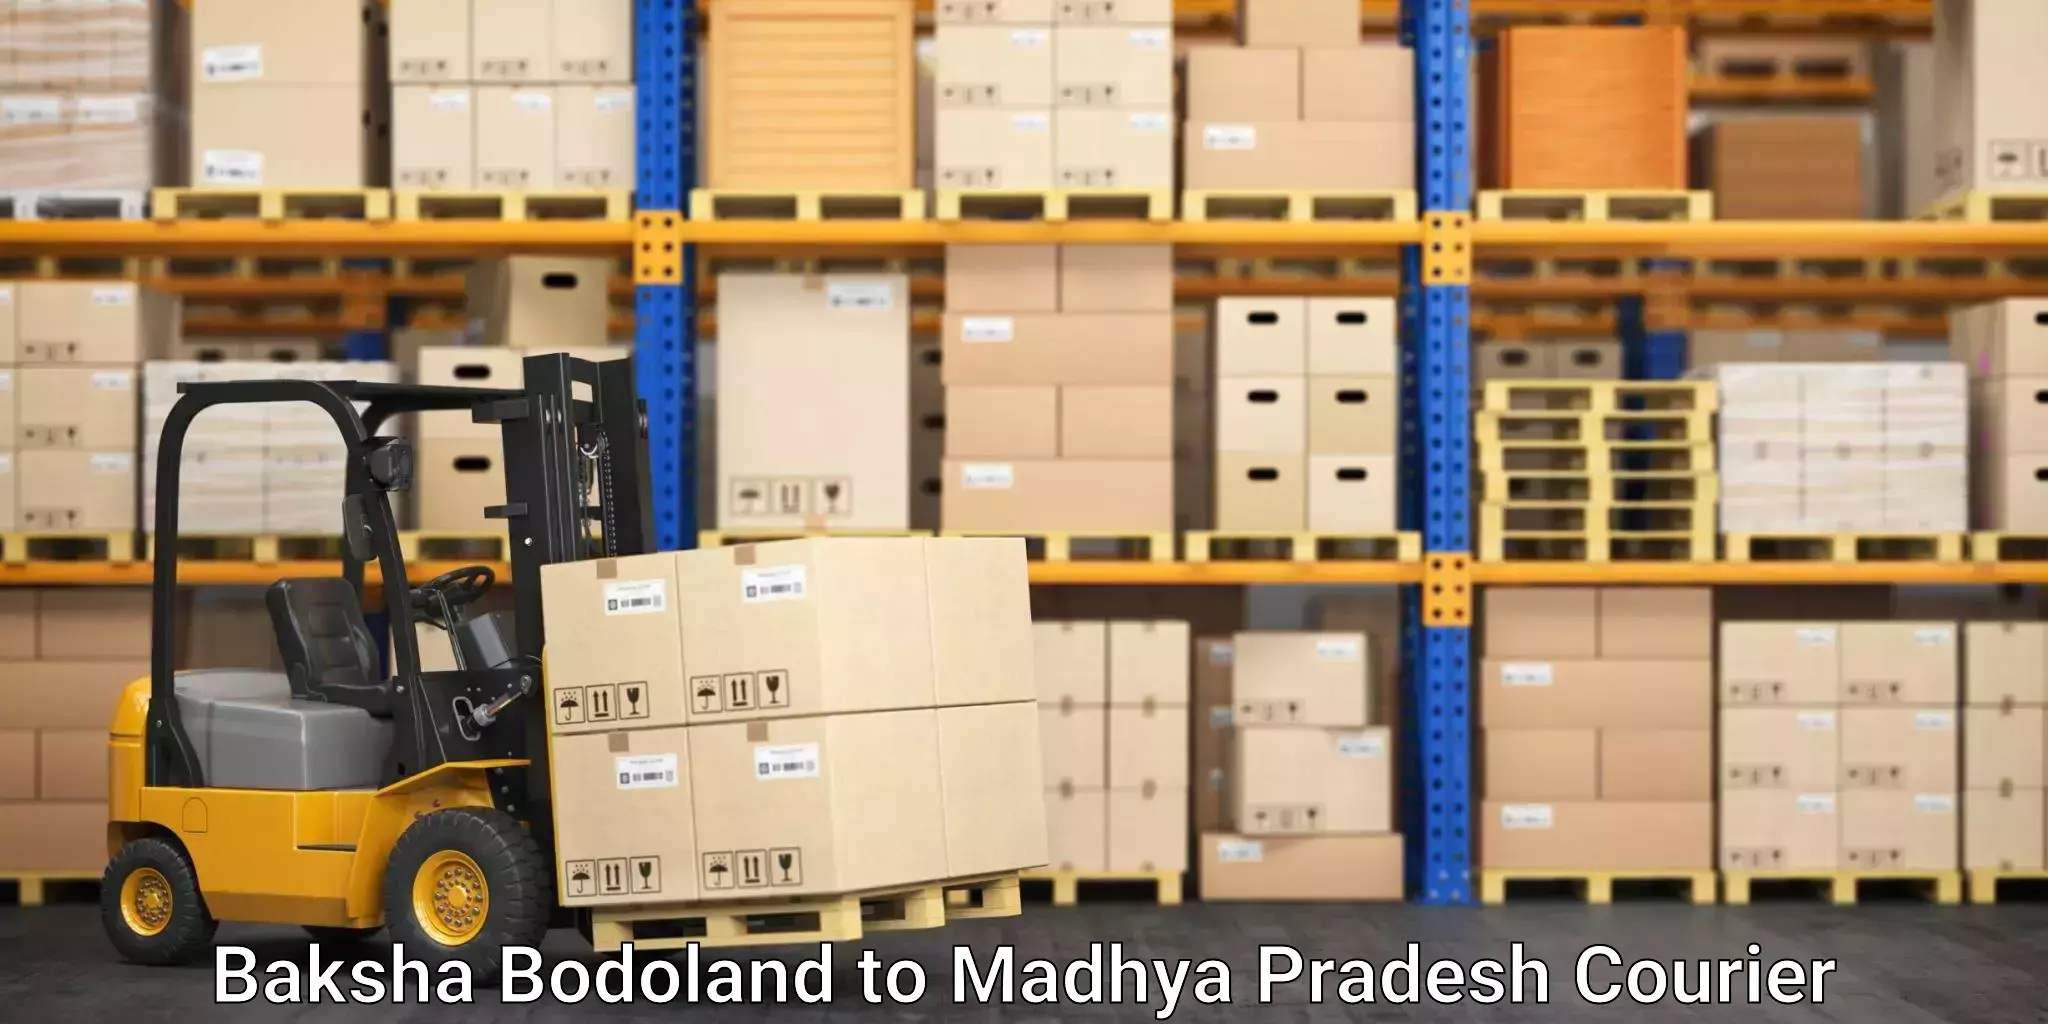 Courier service comparison Baksha Bodoland to Madhya Pradesh